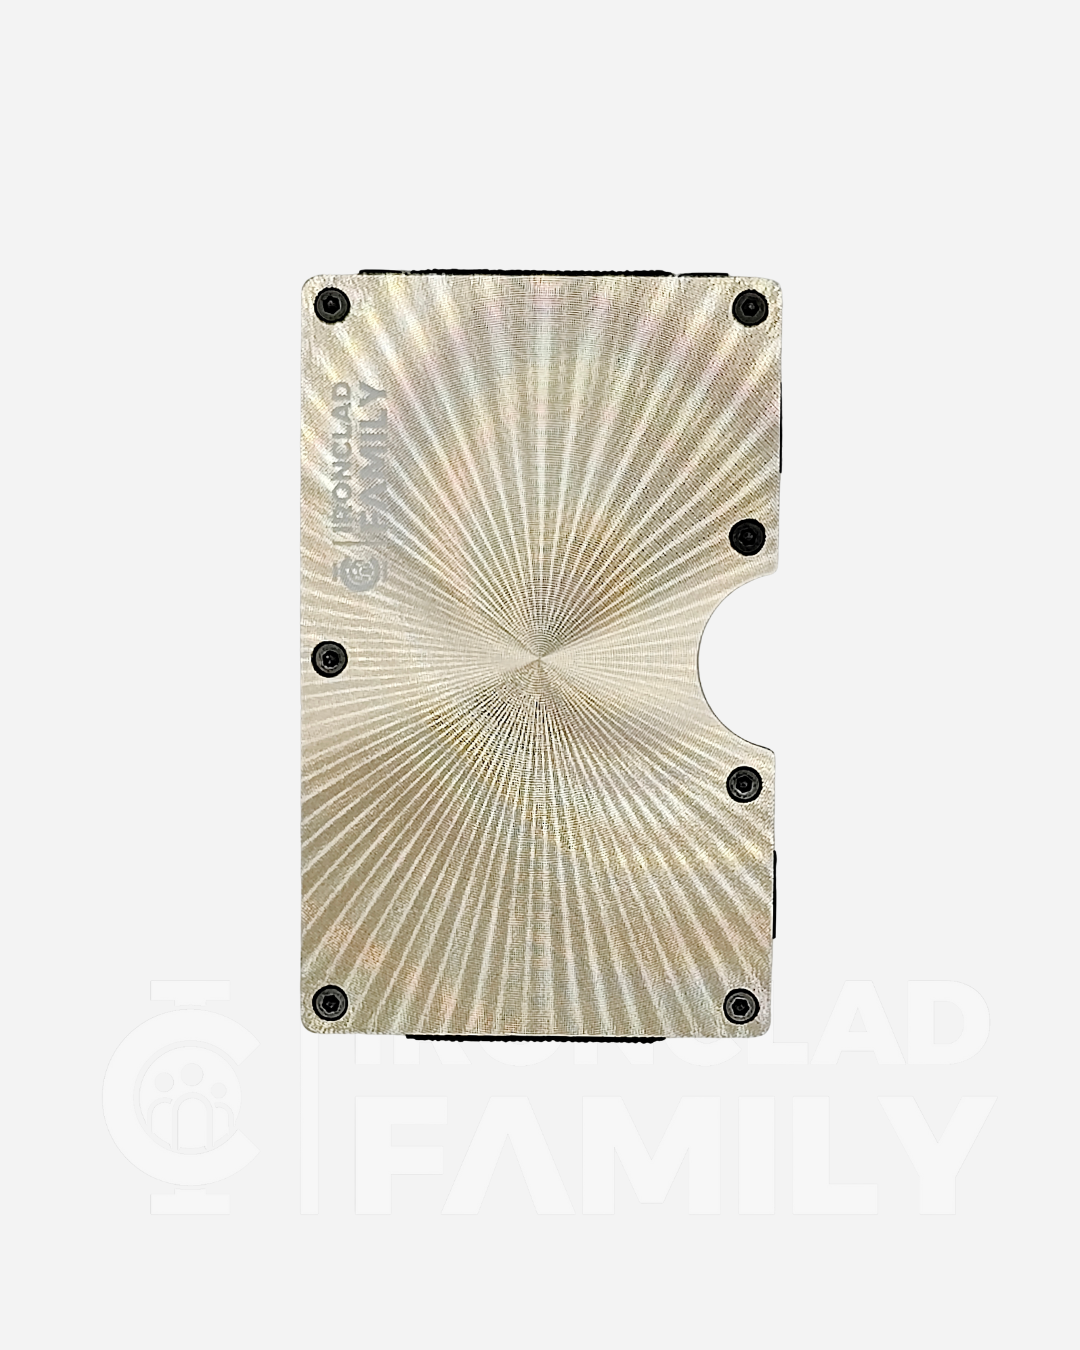 White textured metal RFID blocking wallet with a textured design